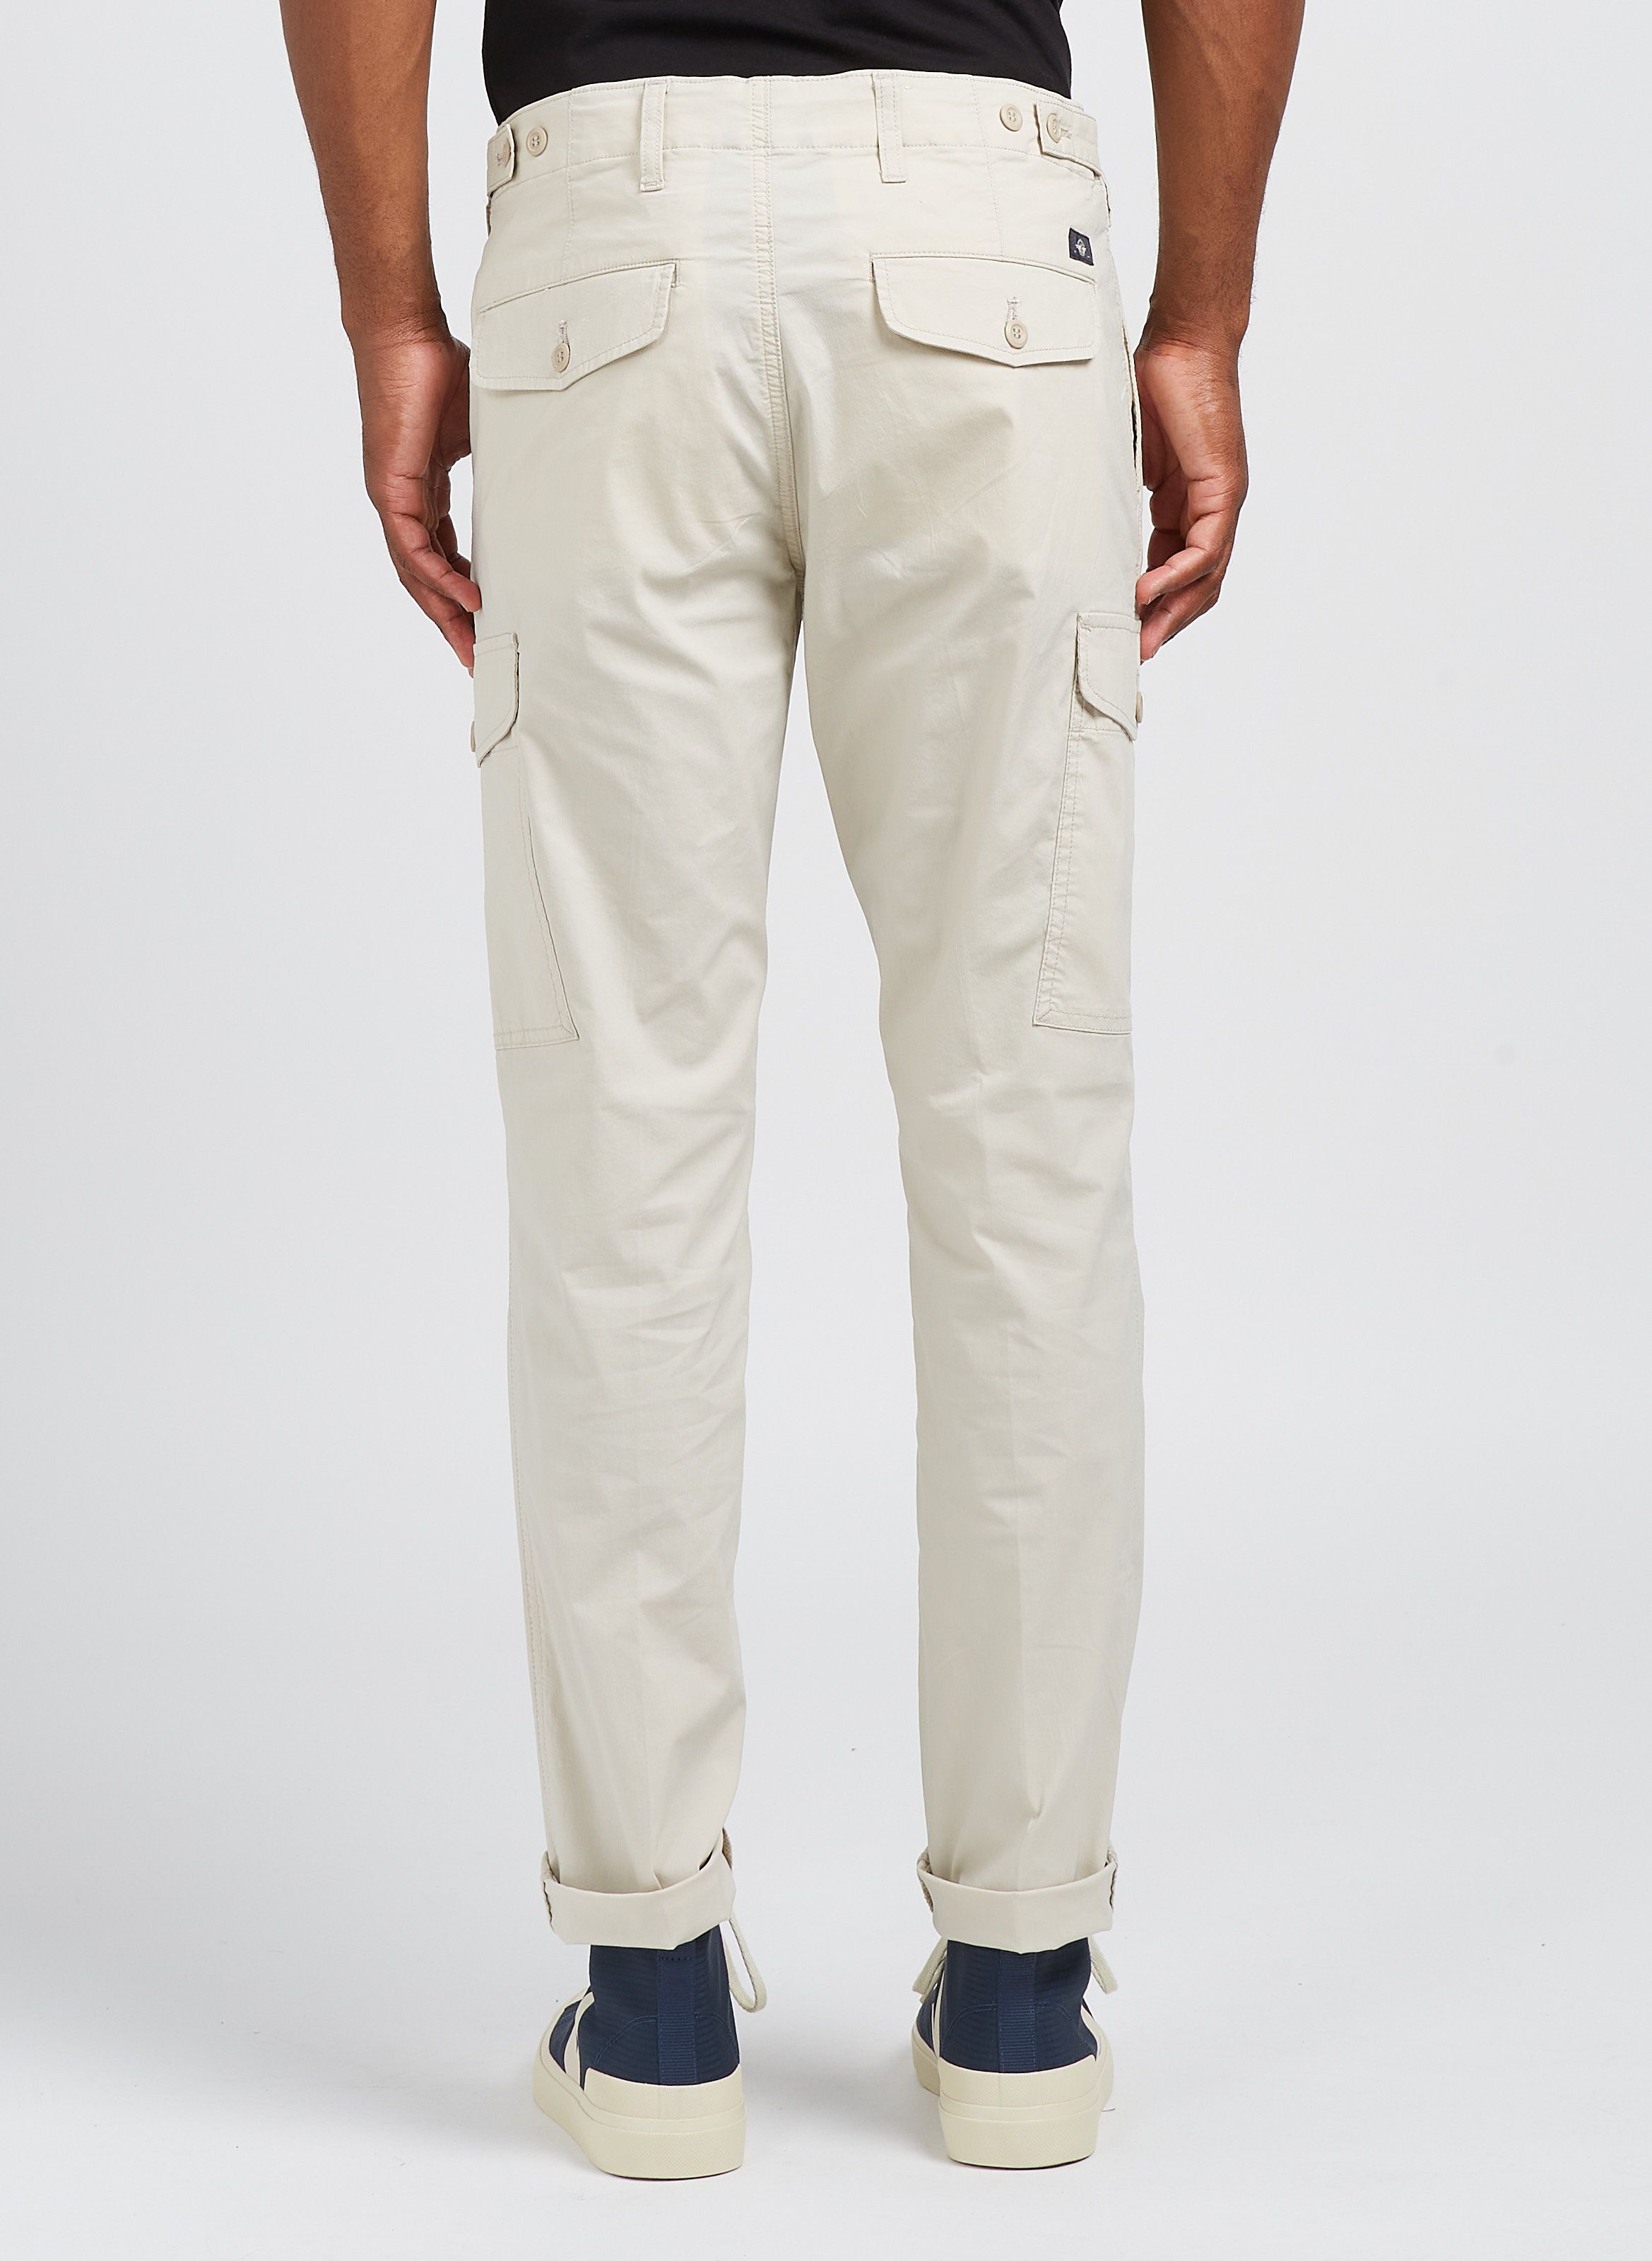 Sun + Stone Men's Morrison Cargo Pants, Created for Macy's - Macy's